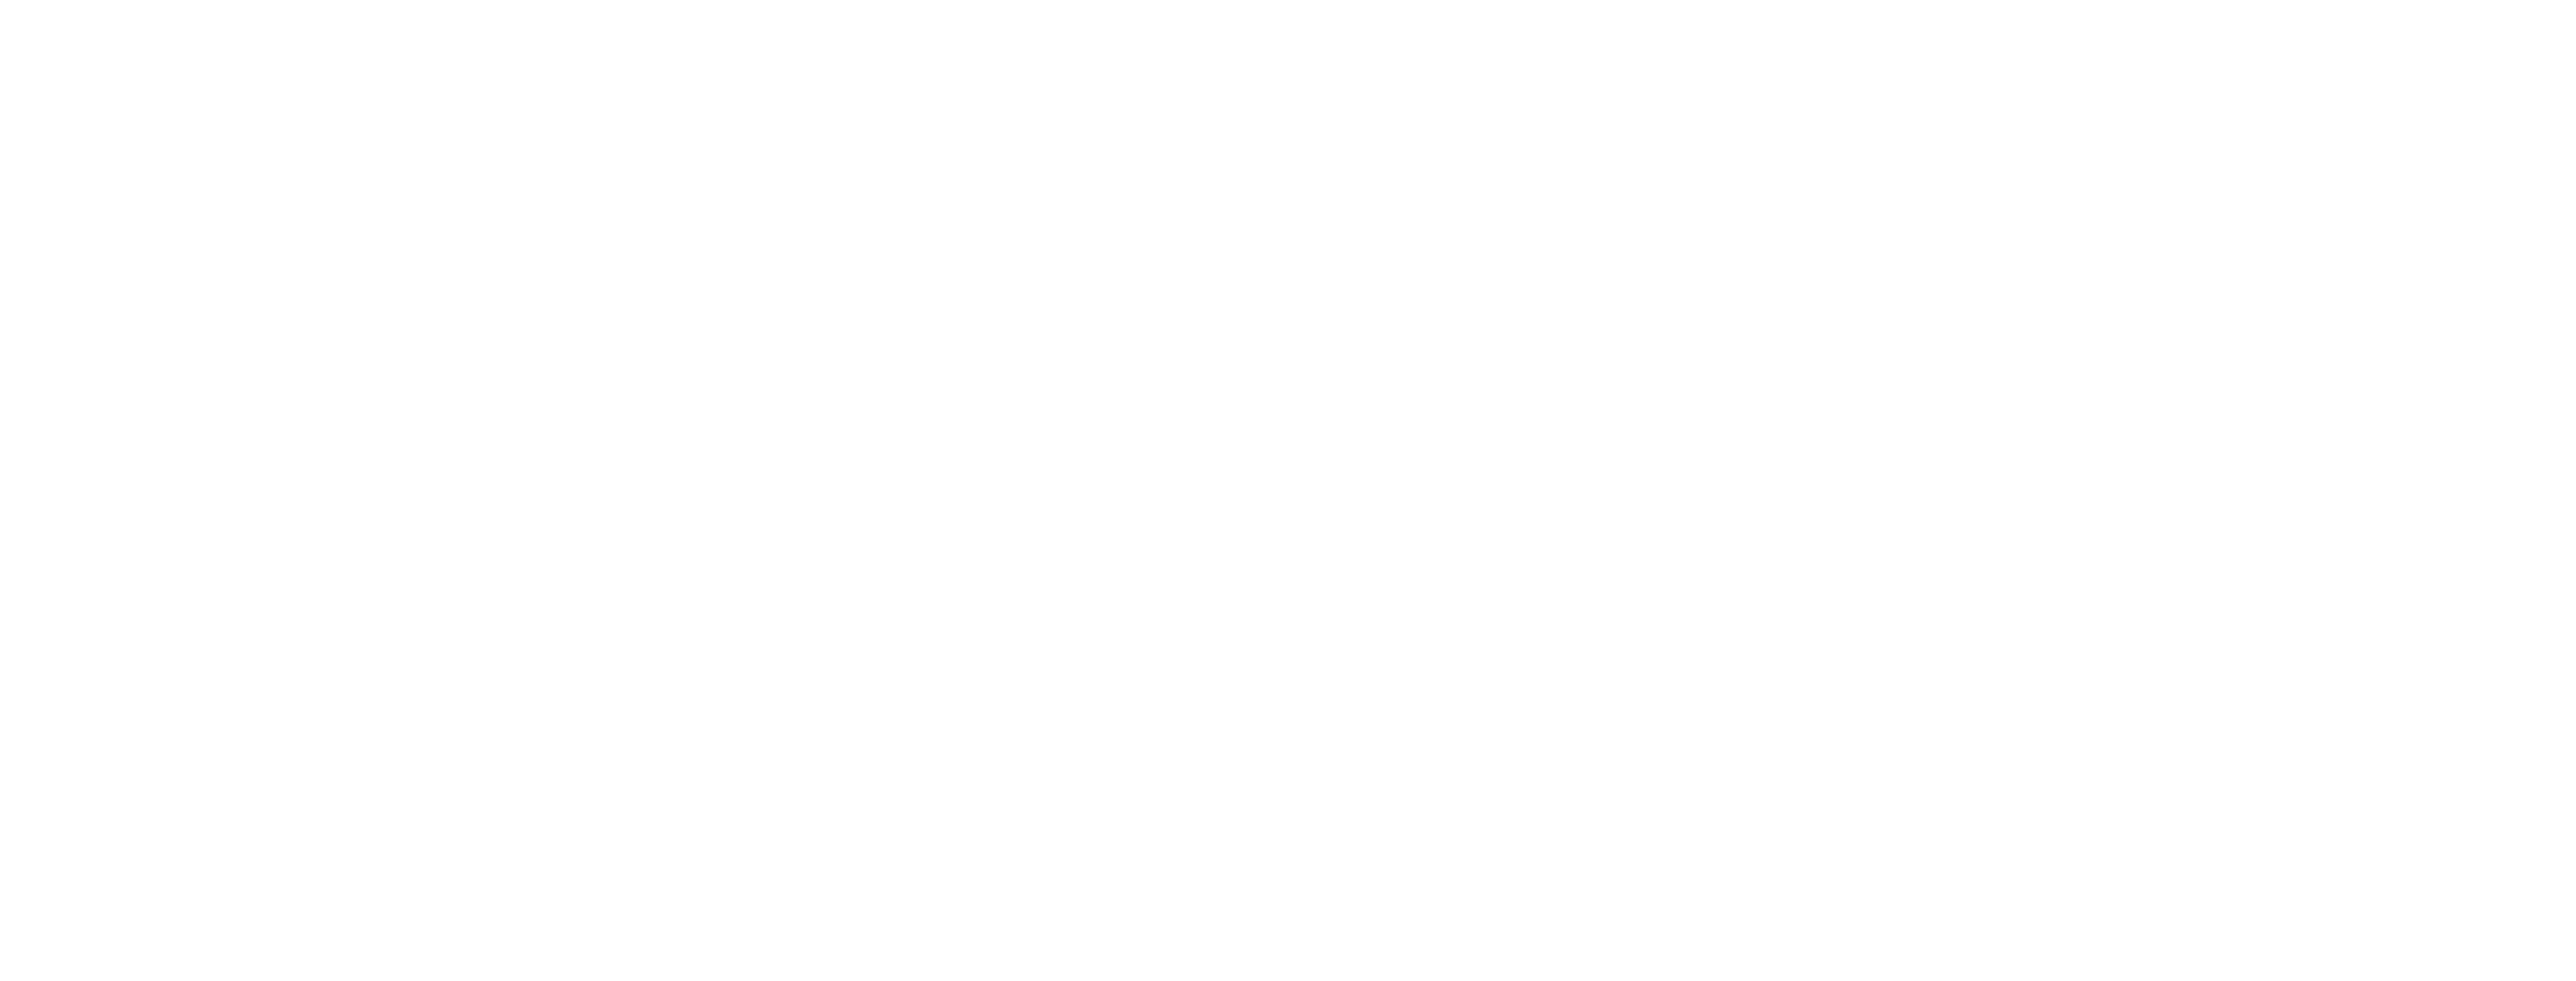 SpoonFed Data